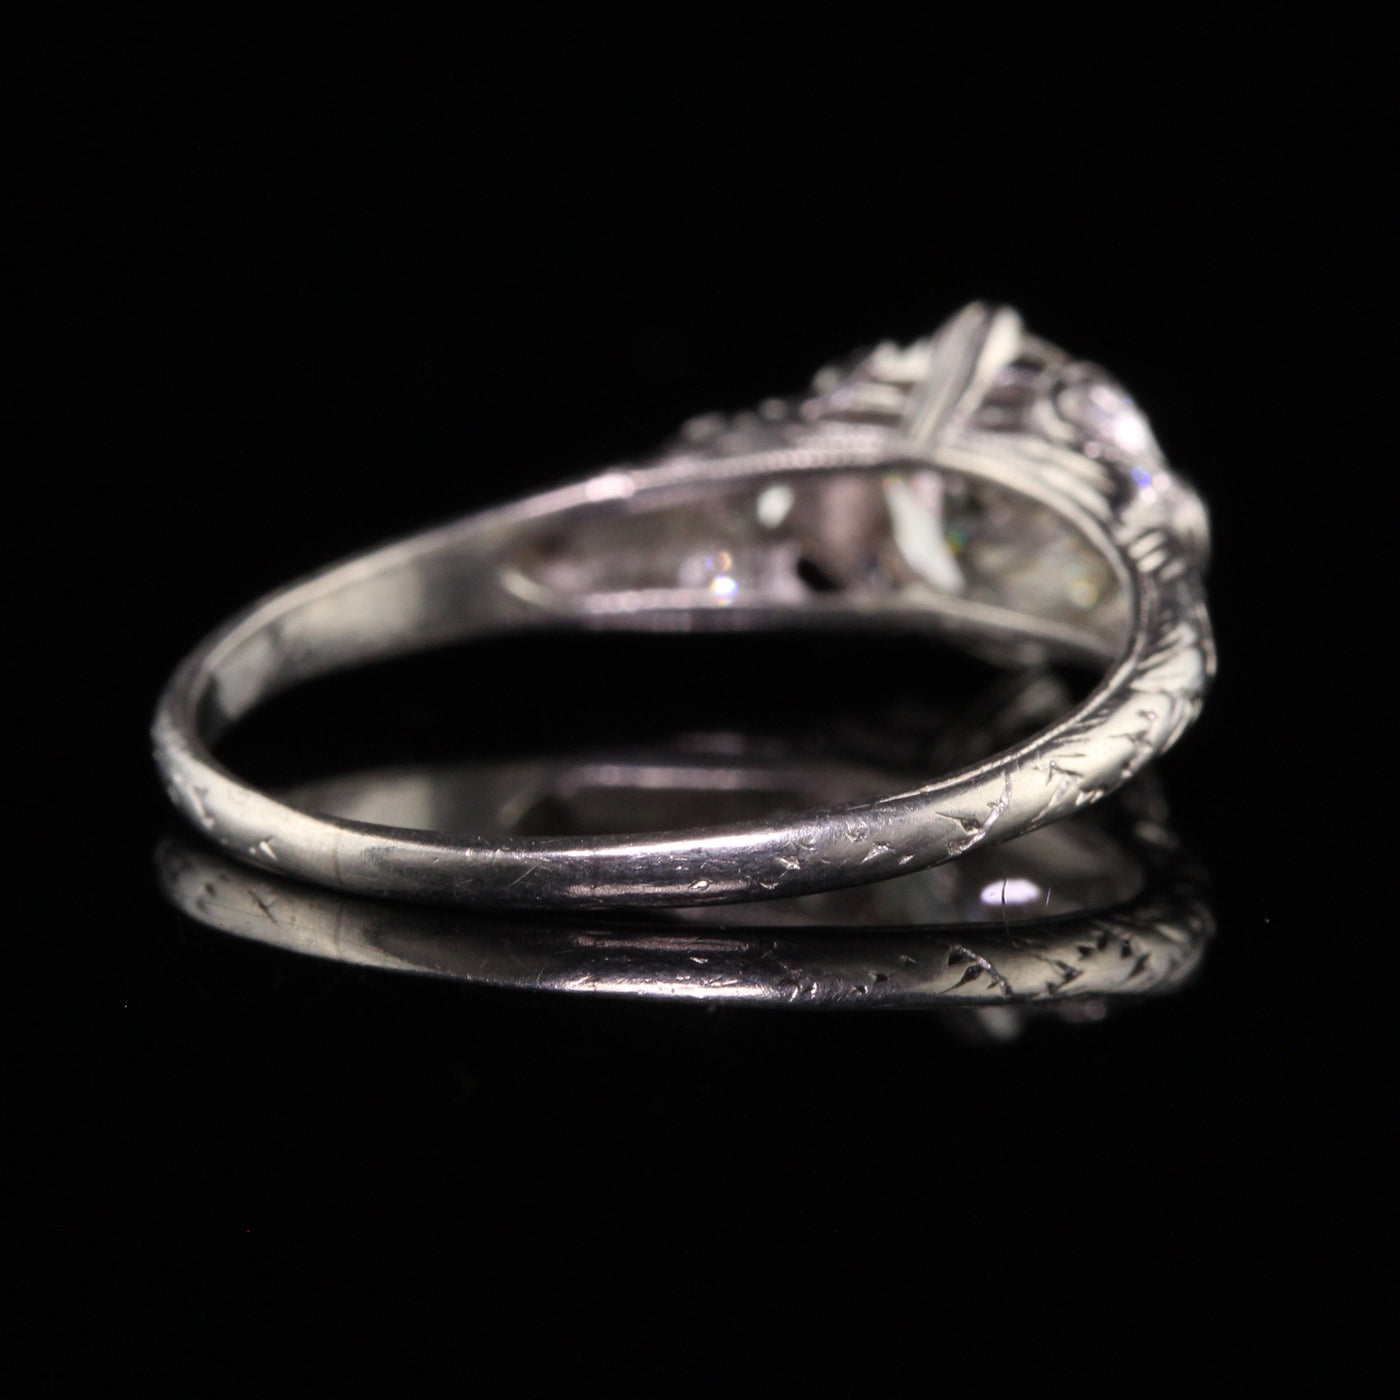 Antique Edwardian Platinum Old European Cut Diamond Floral Engagement Ring - GIA